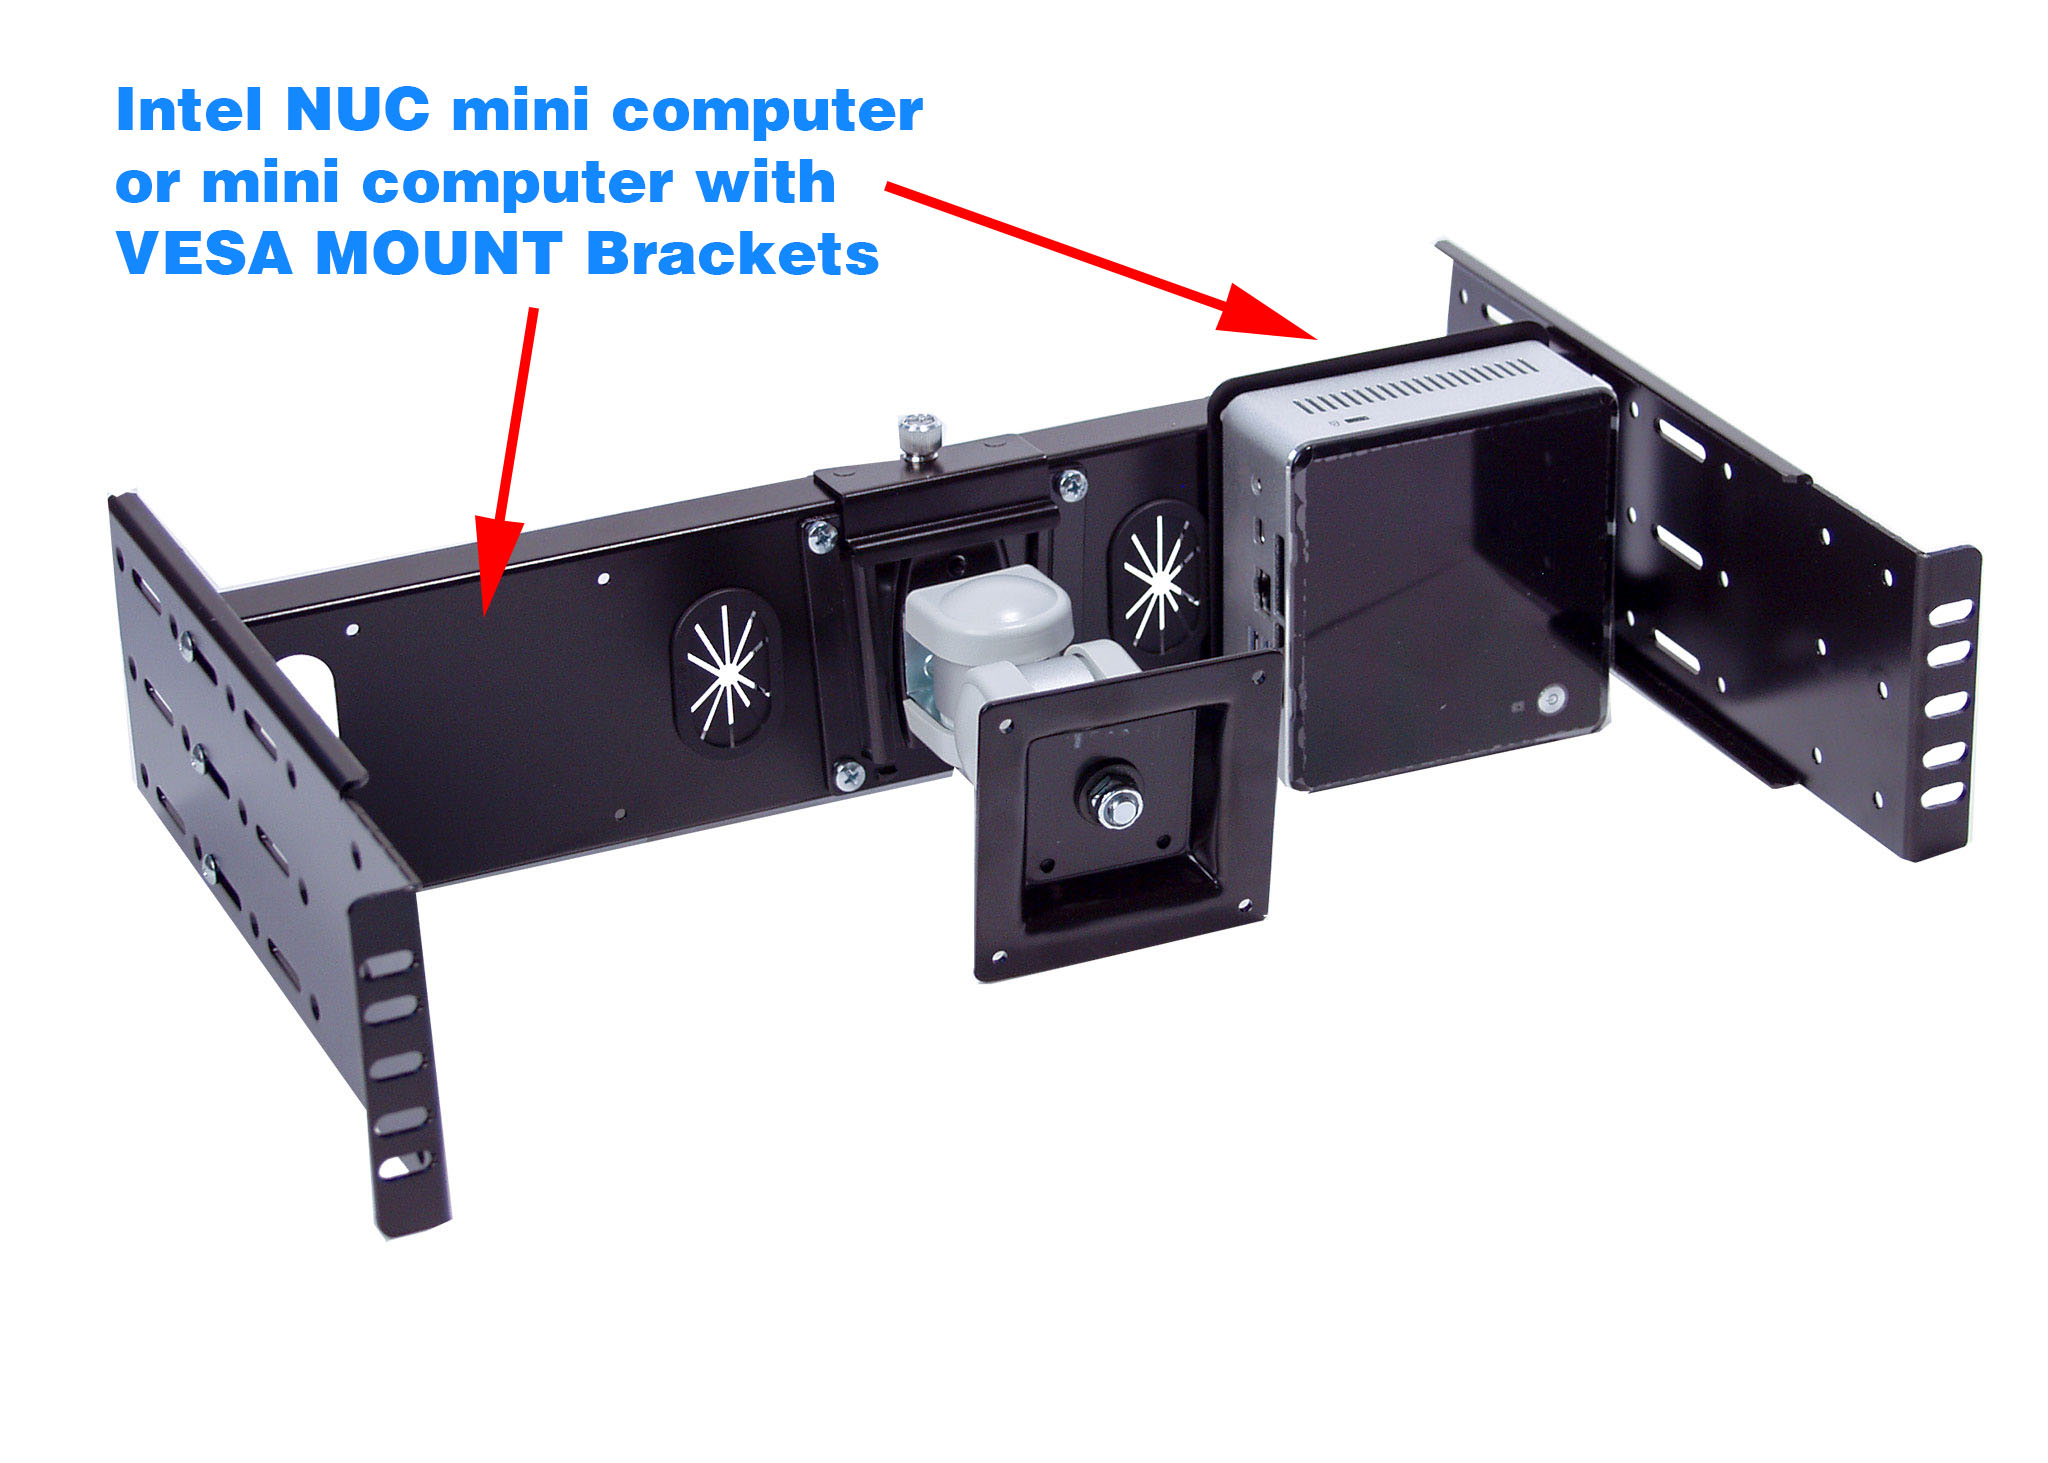 NUC computer